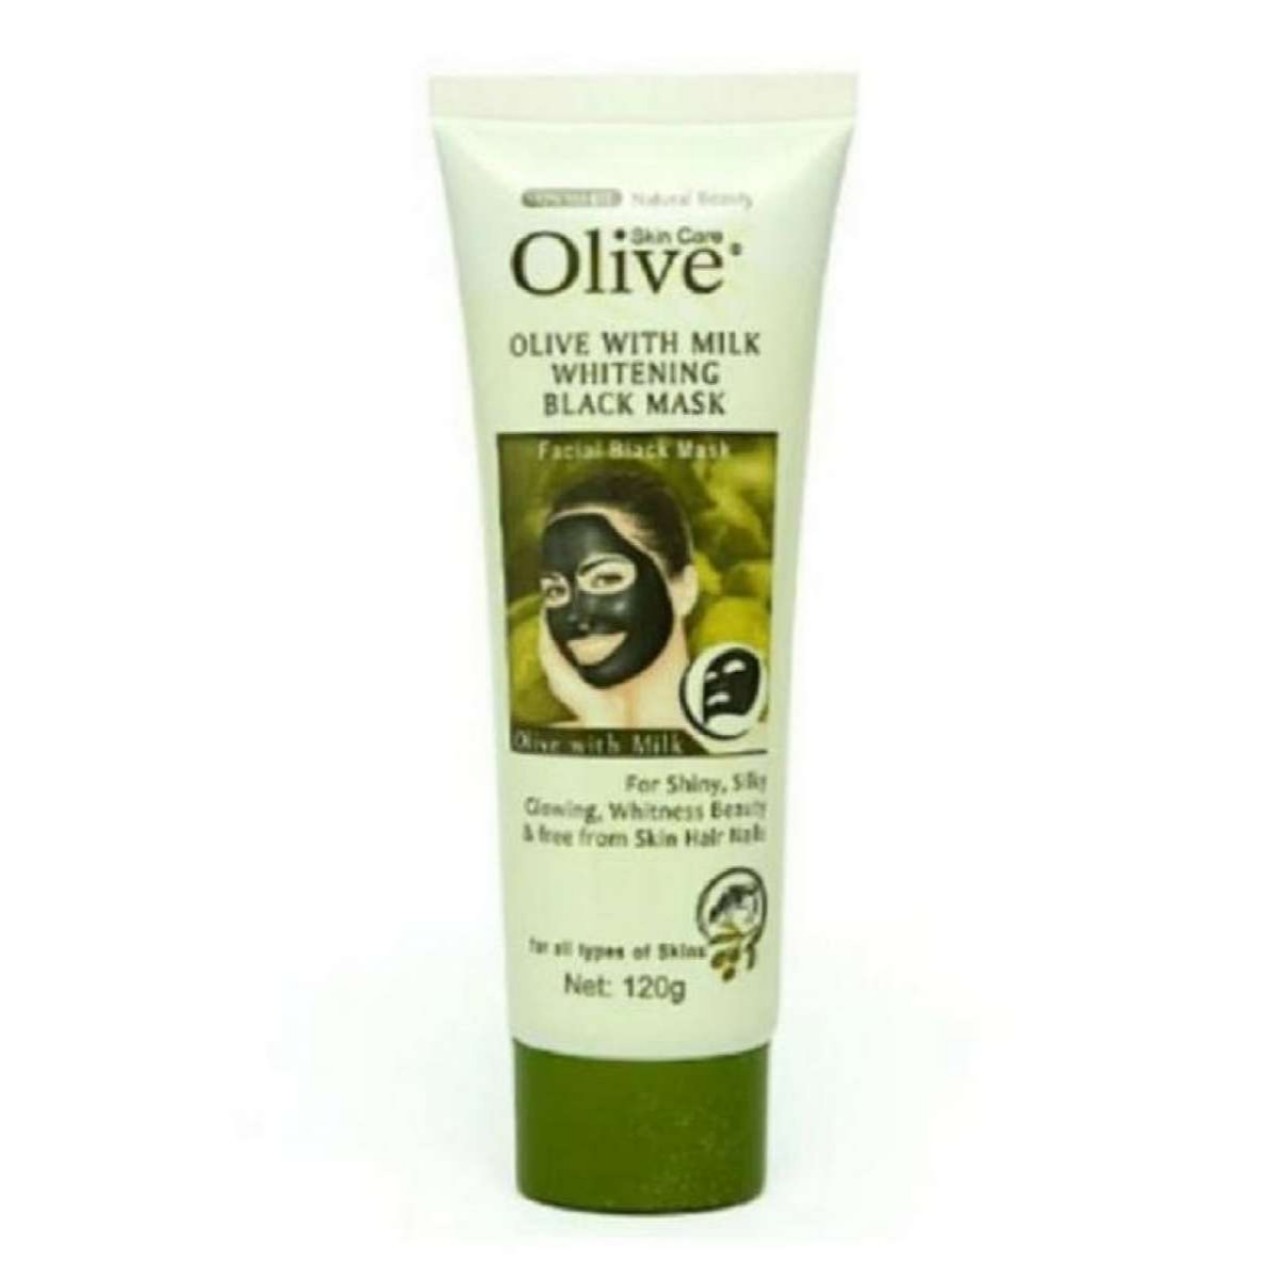 Original Olive With Milk Whitening Black Mask